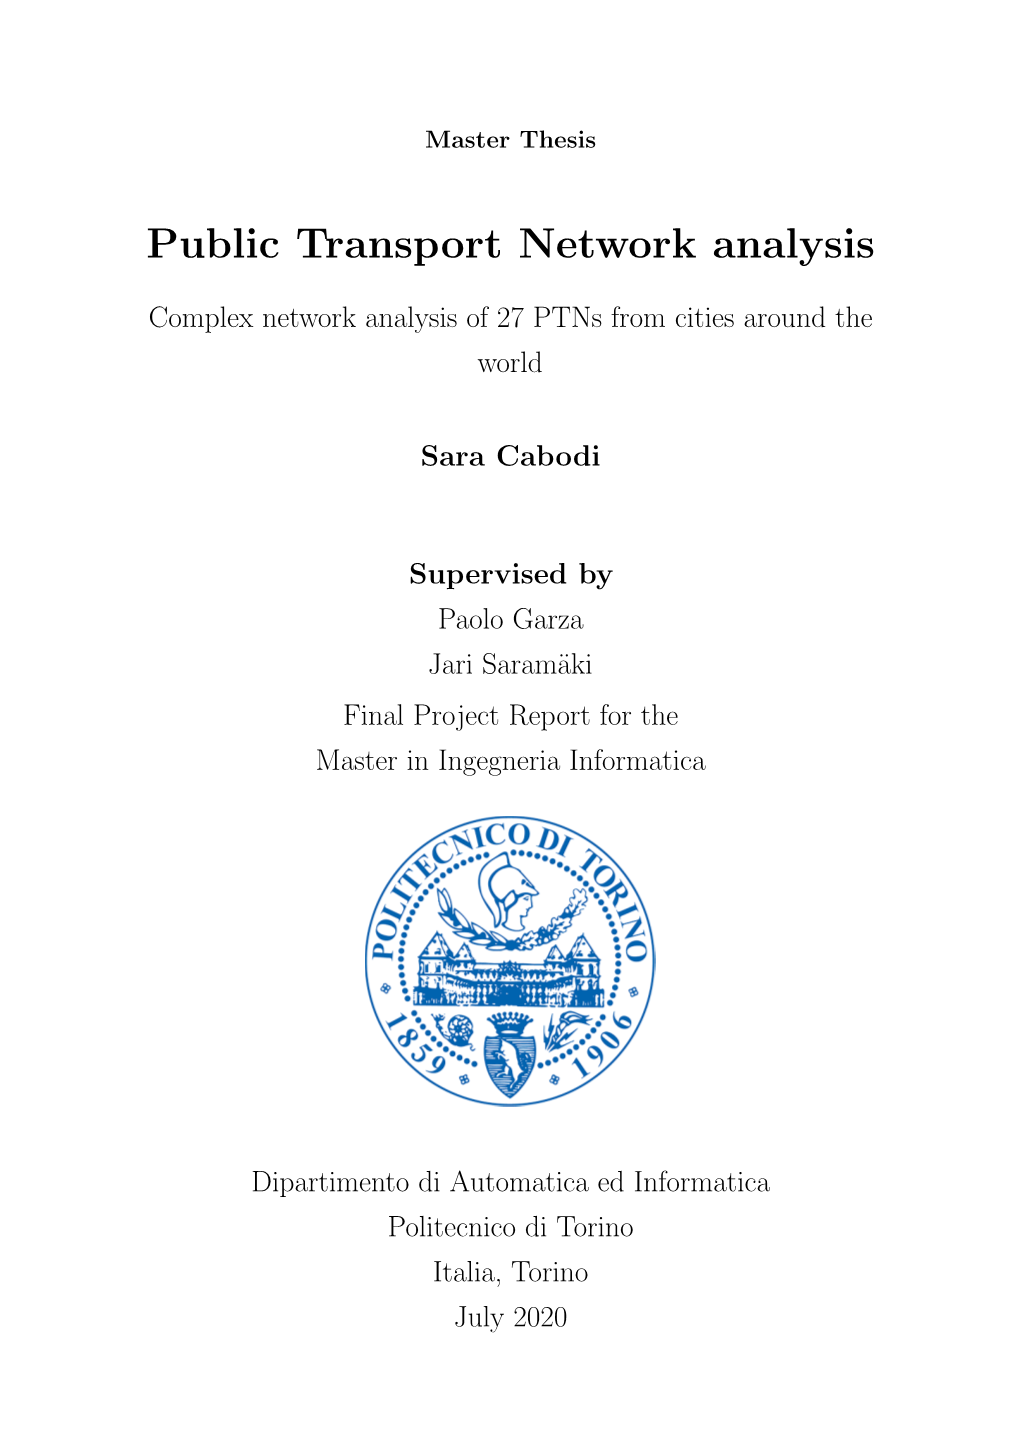 Public Transport Network Analysis